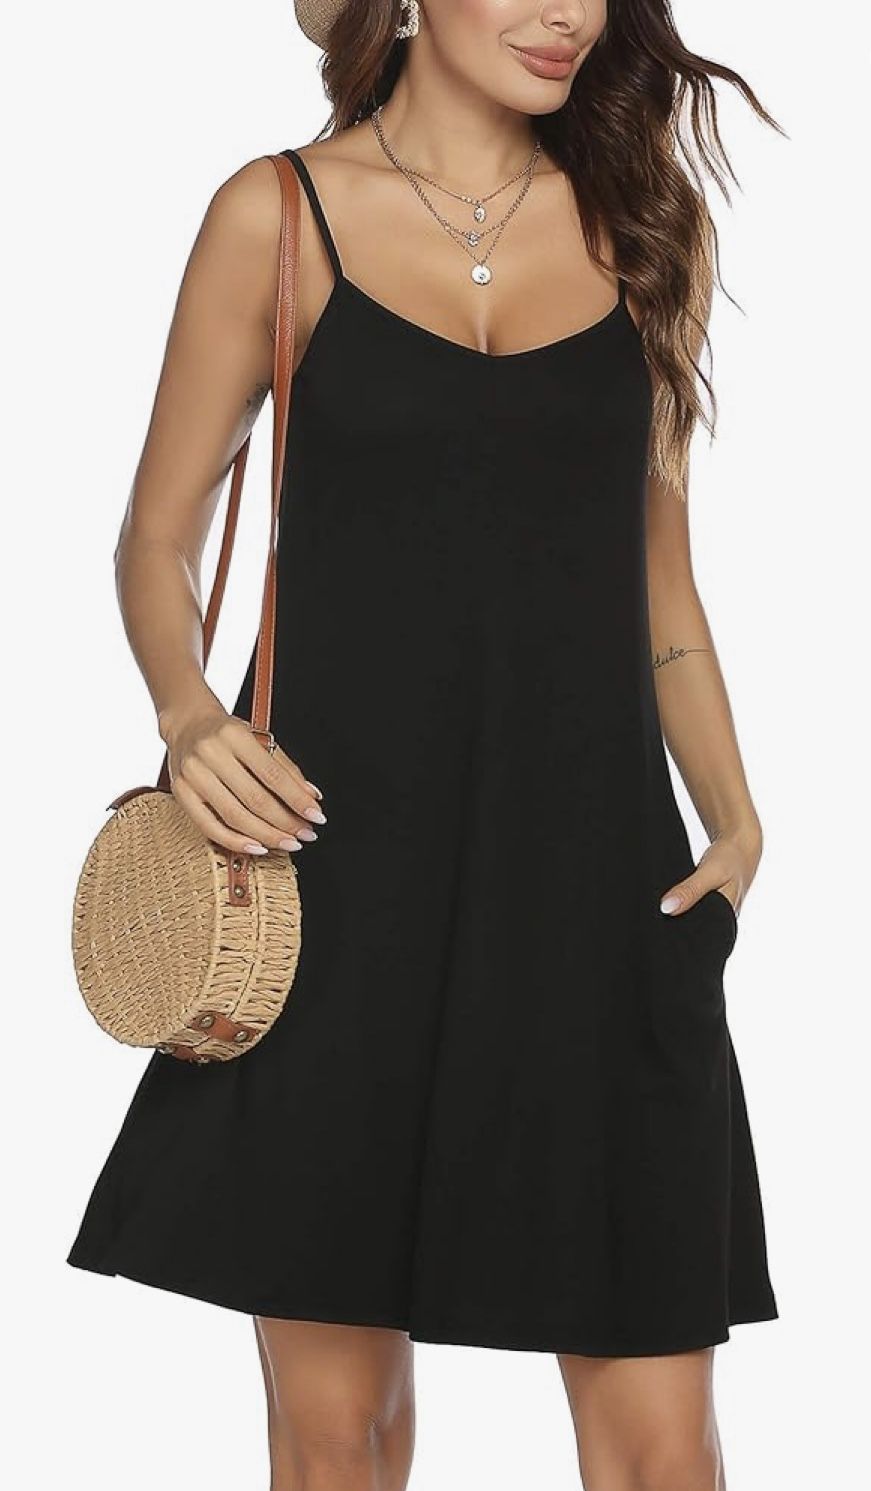 Women Casual Summer Spaghetti Strap Swing T Shirt Dress Cover Up Beach Dress